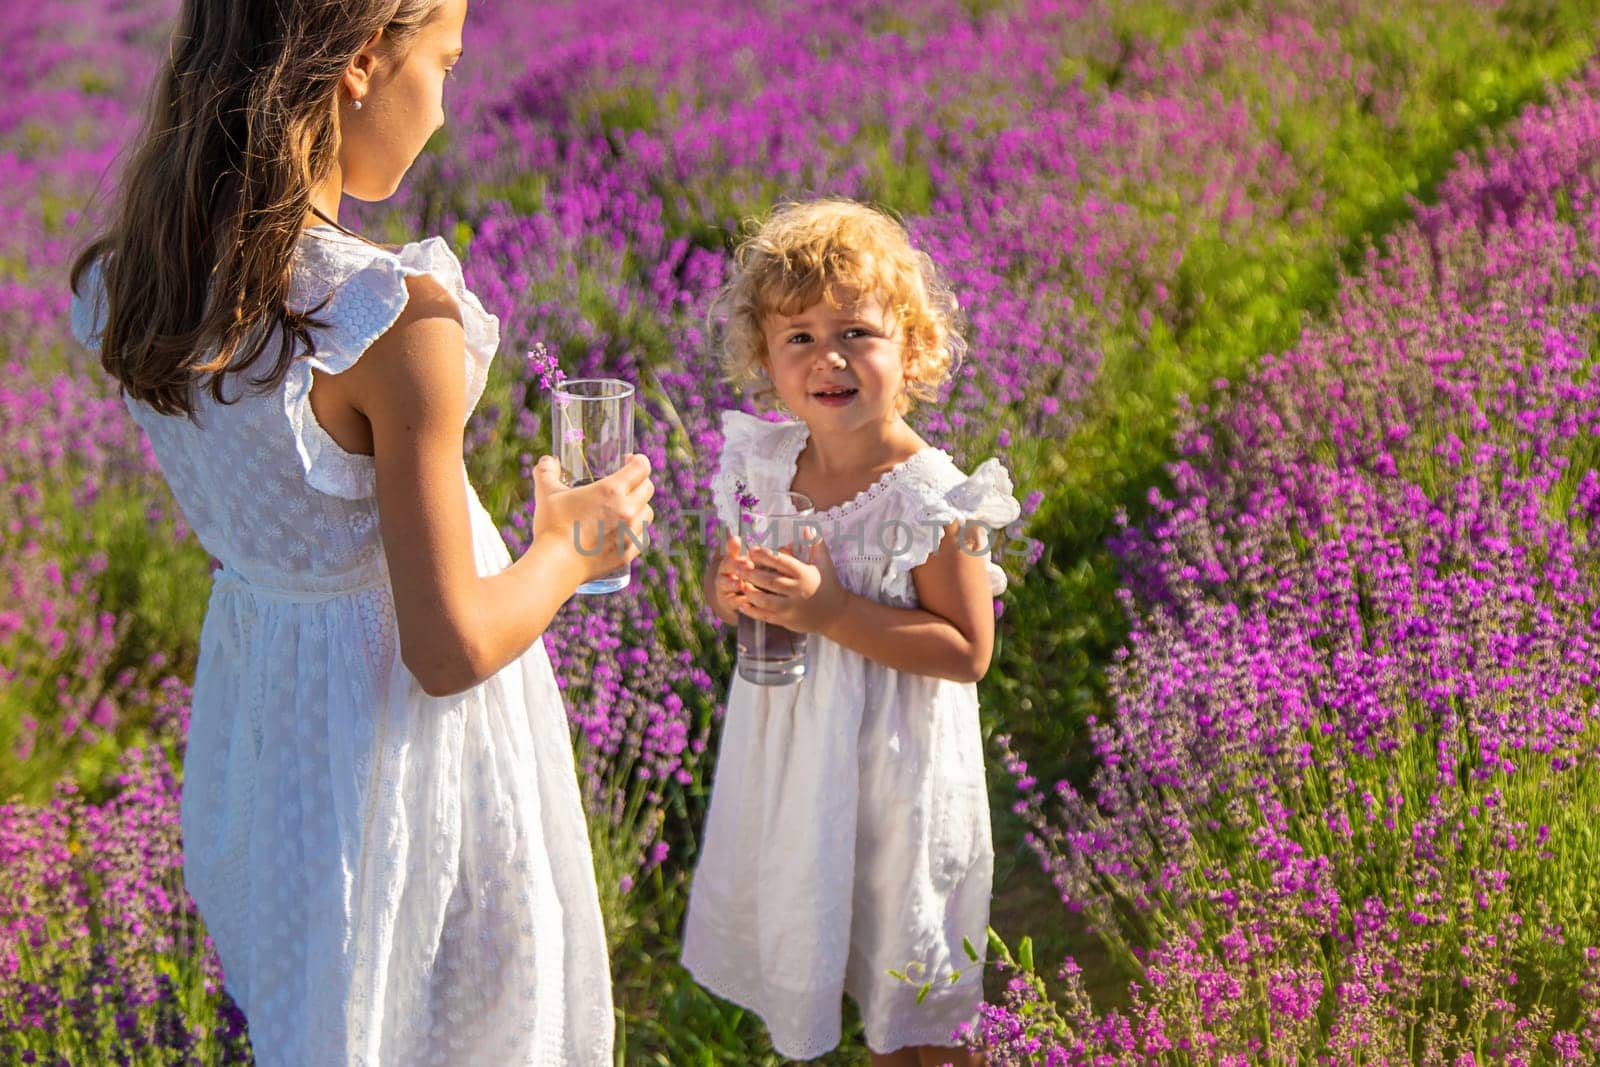 Children in a lavender field drink lemonade. Selective focus. Nature.